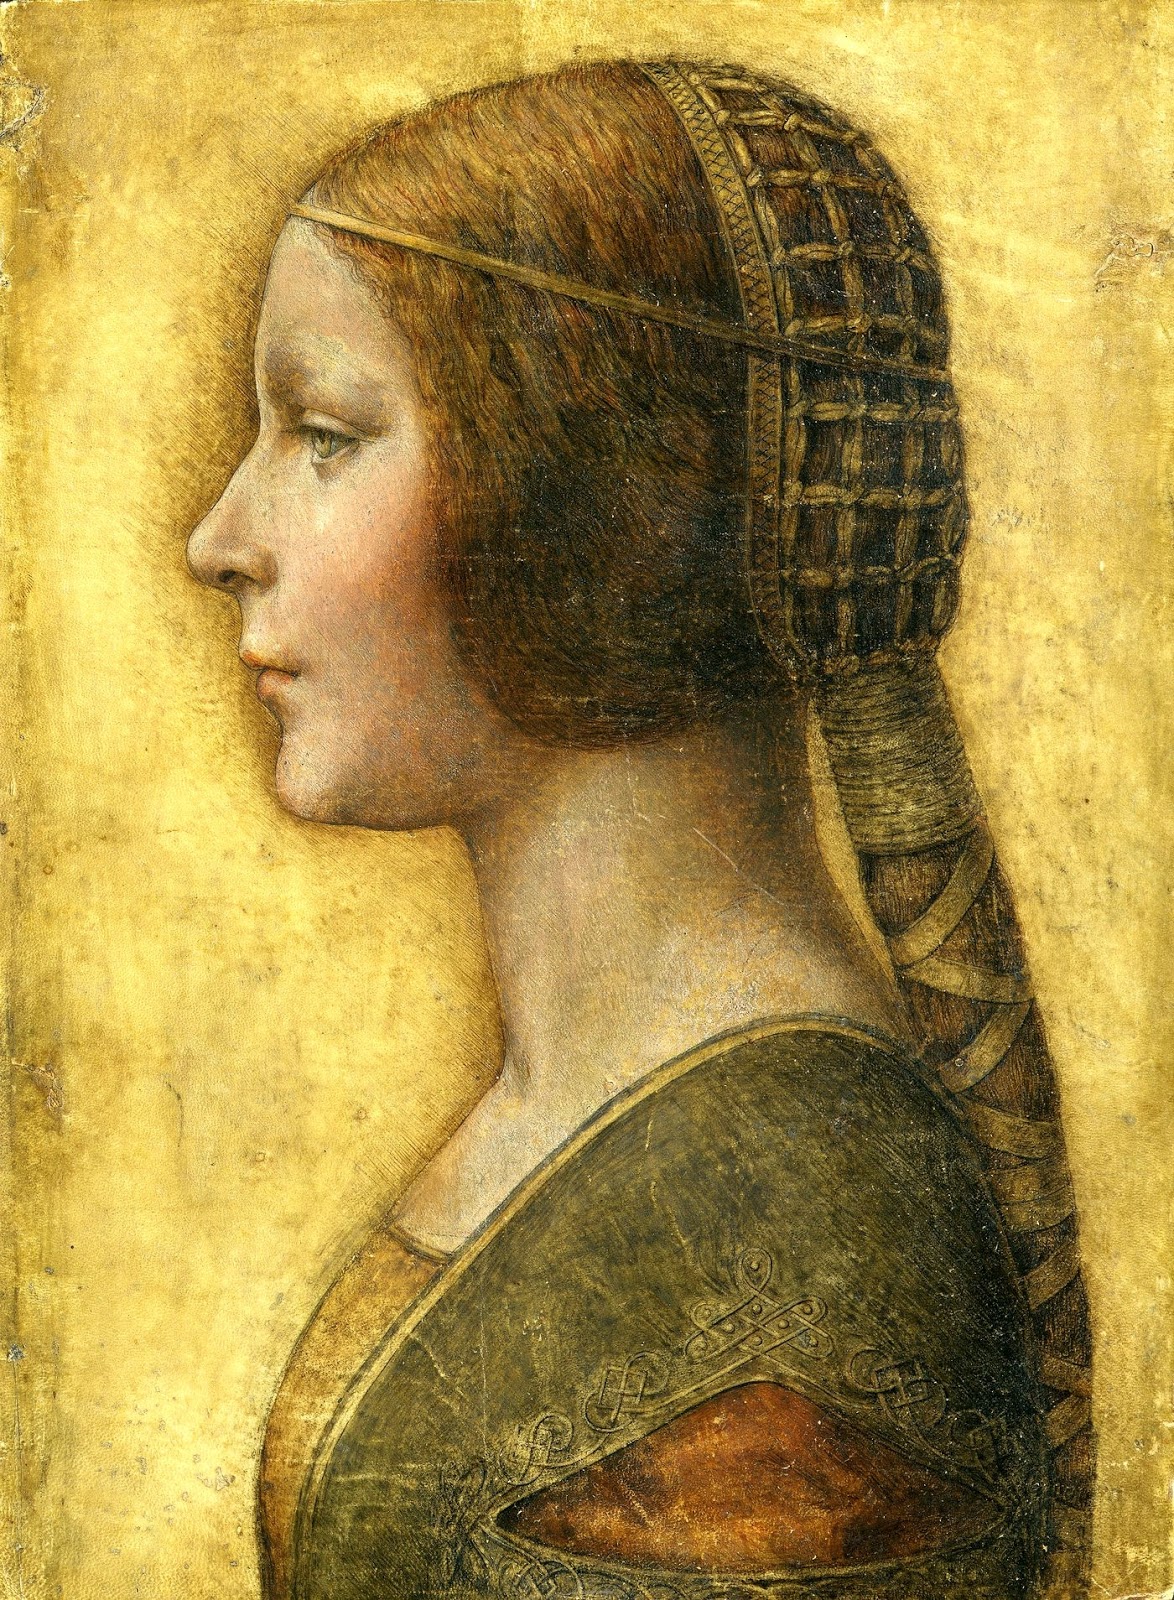 Leonardo+da+Vinci-1452-1519 (923).jpg